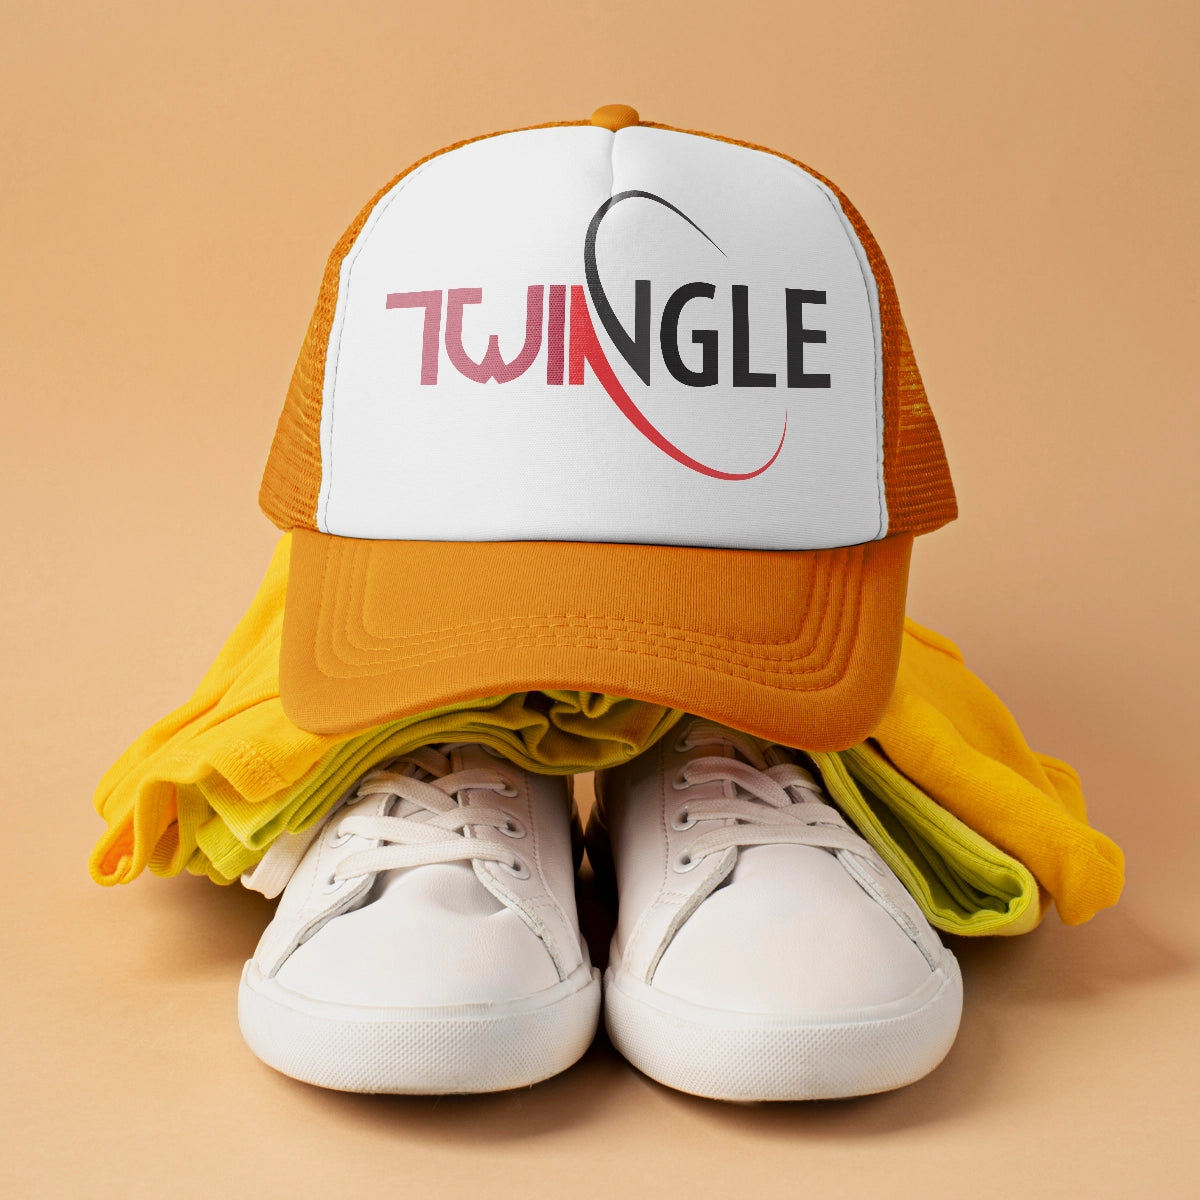 twingle.com